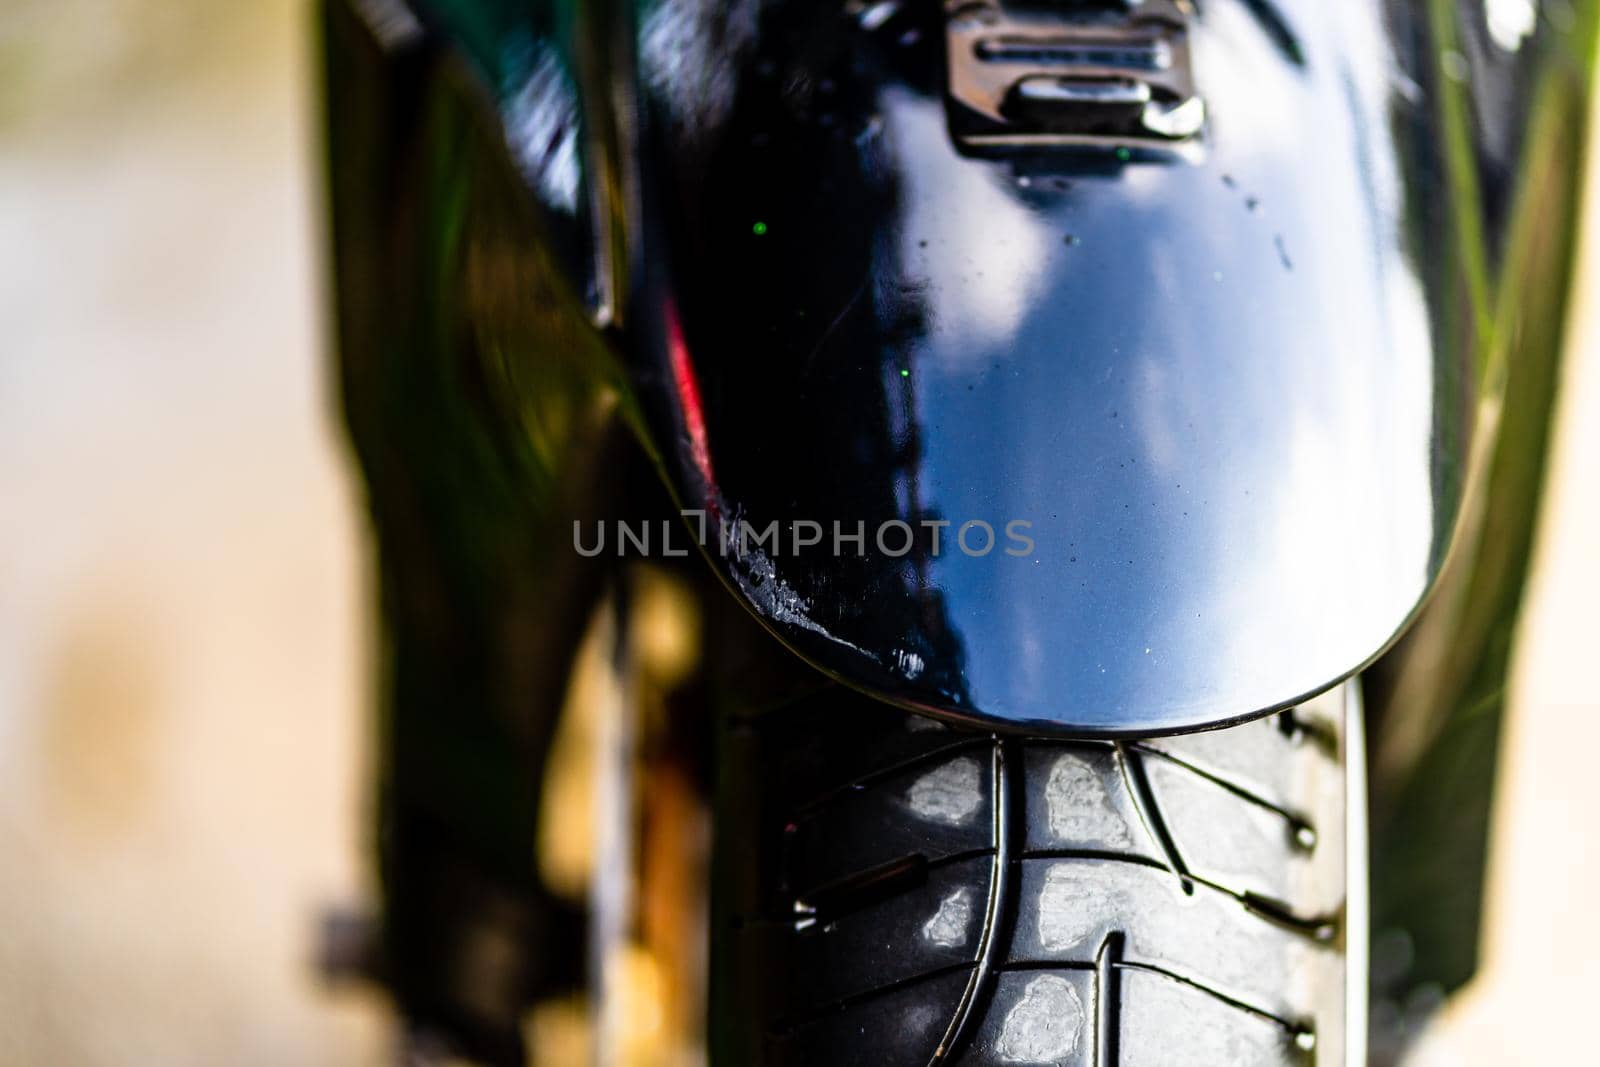 Detail of black motorcycle. Honda Hornet motorcycle detail photo in Bucharest, Romania, 2021